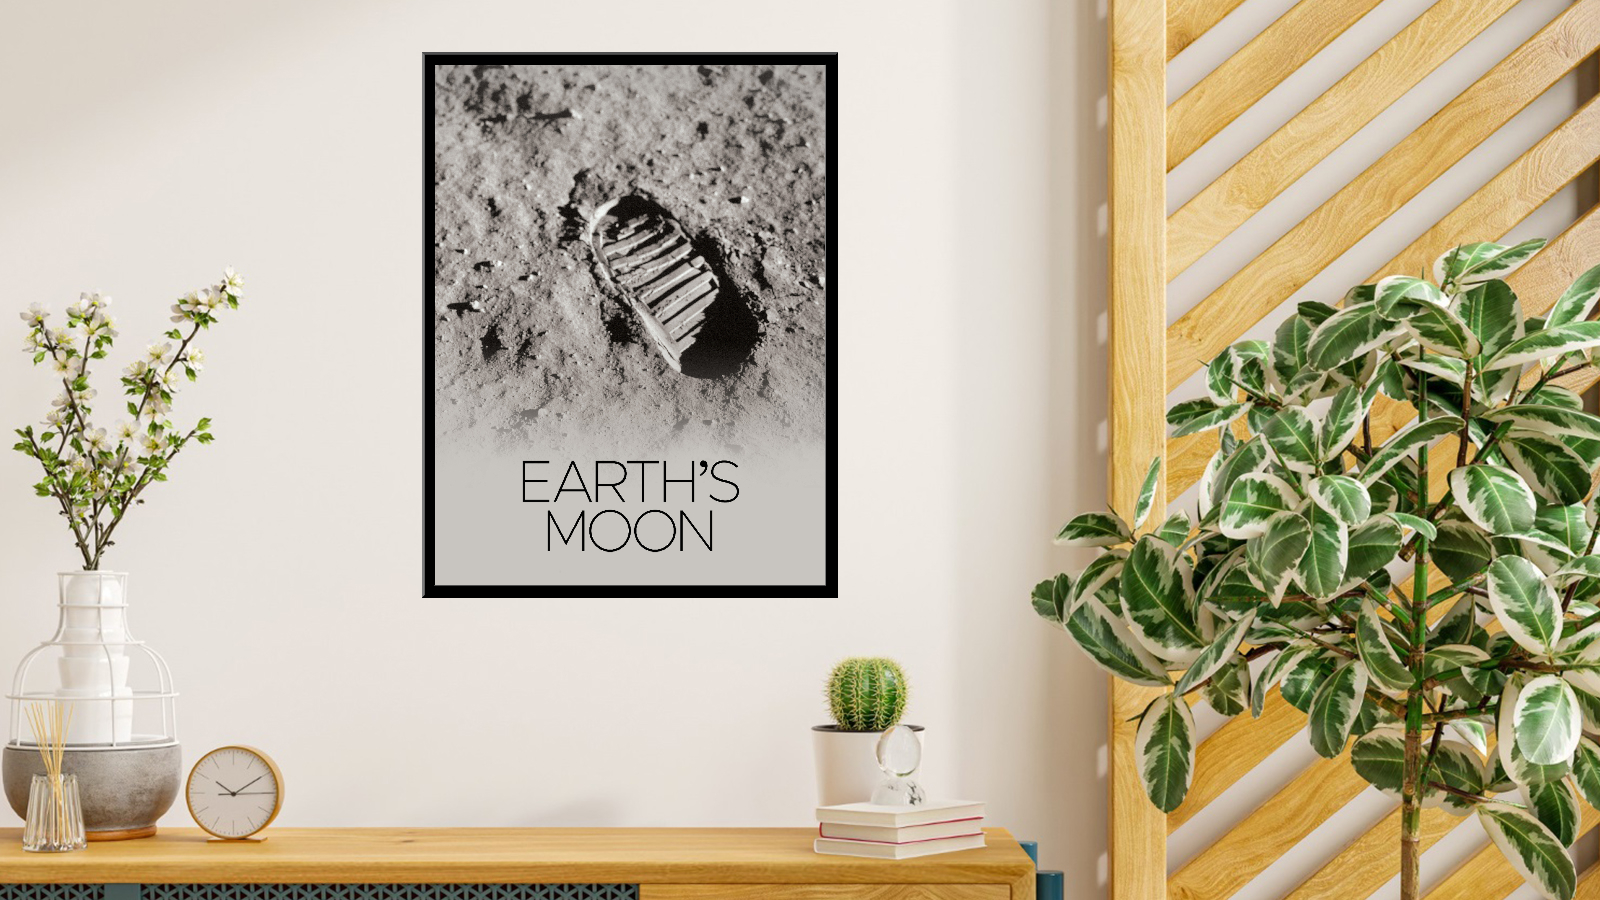 Footprint on the Moon